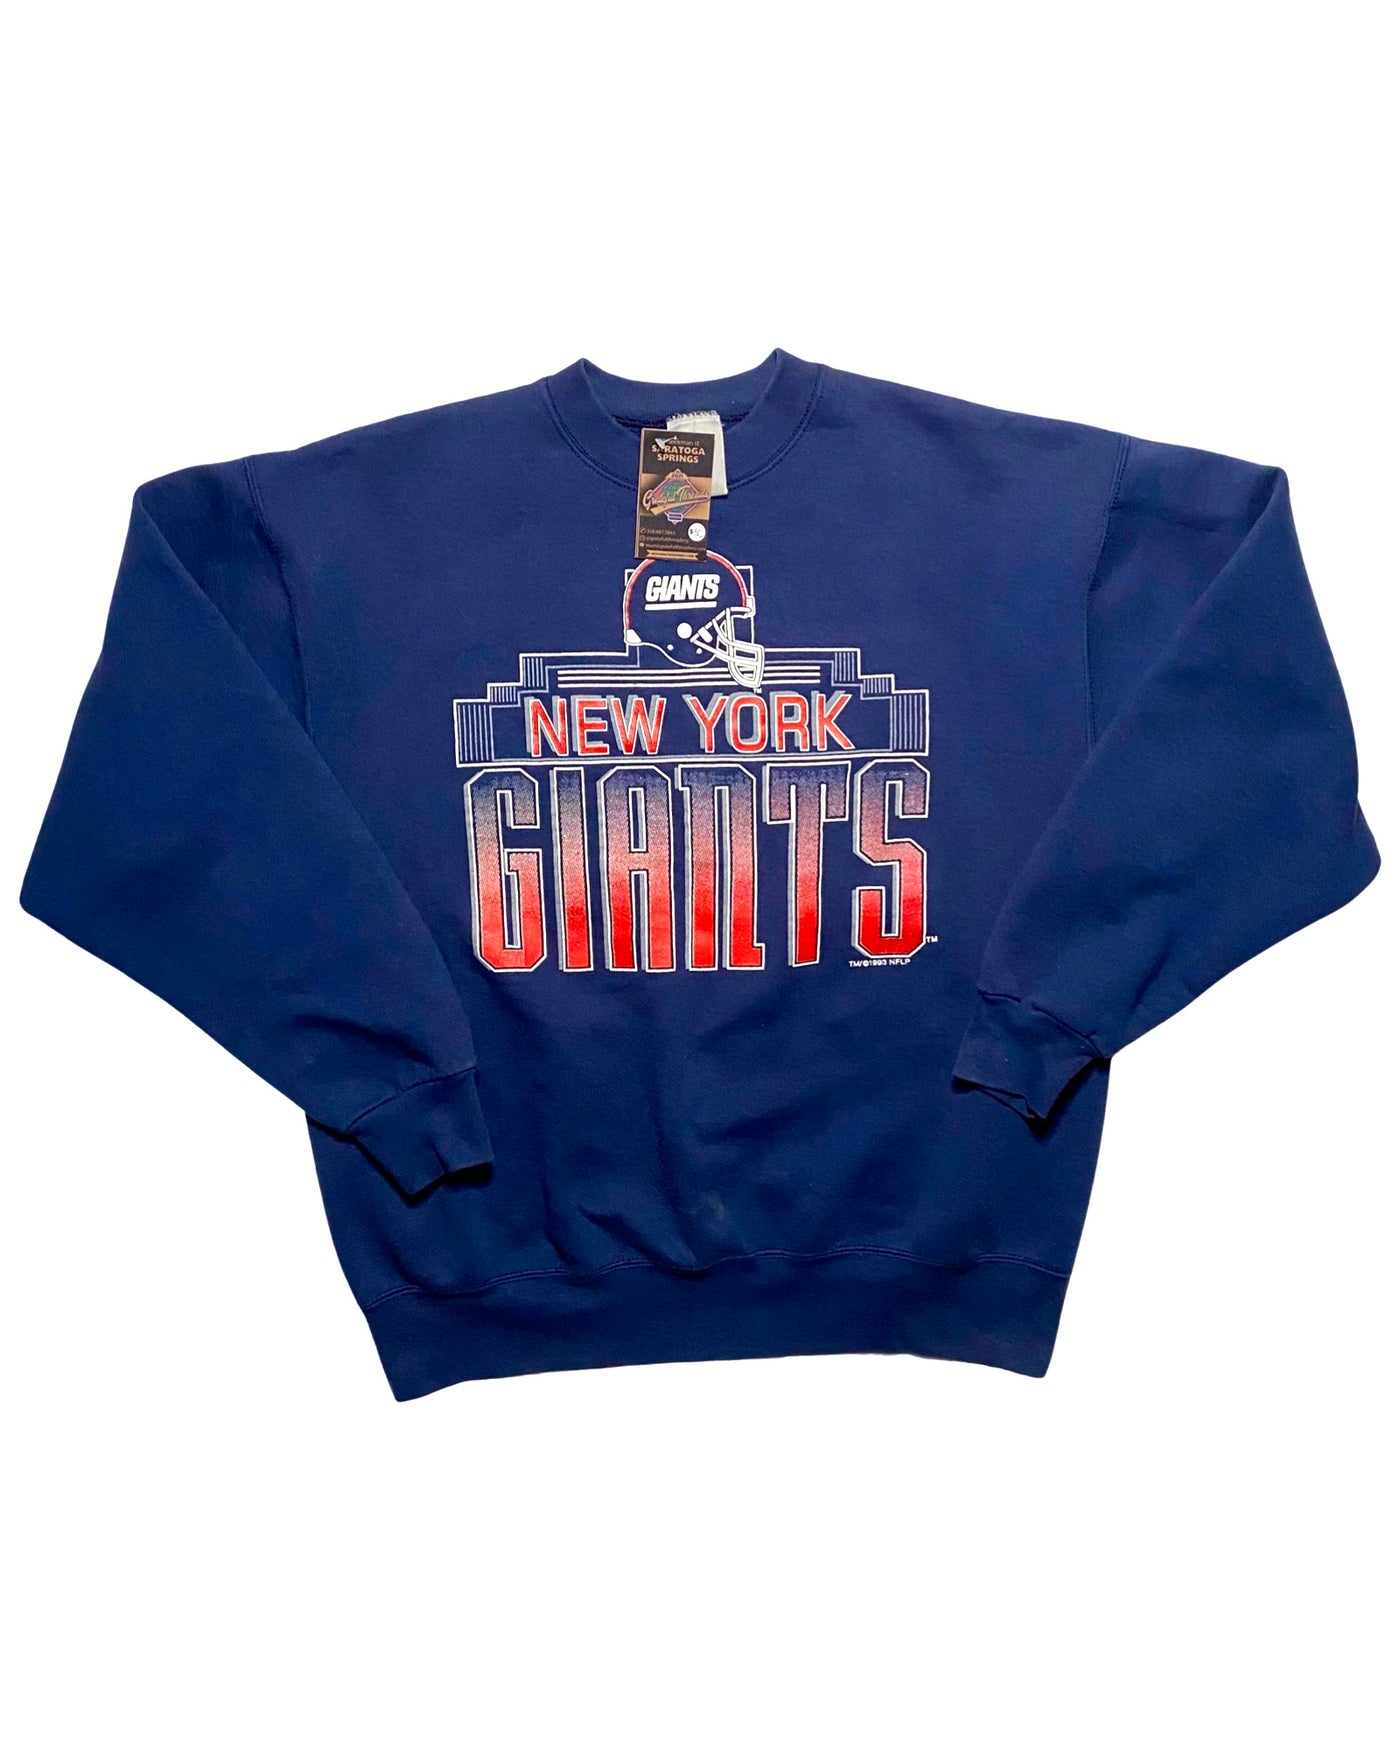 Vintage 1993 New York Giants Crewneck